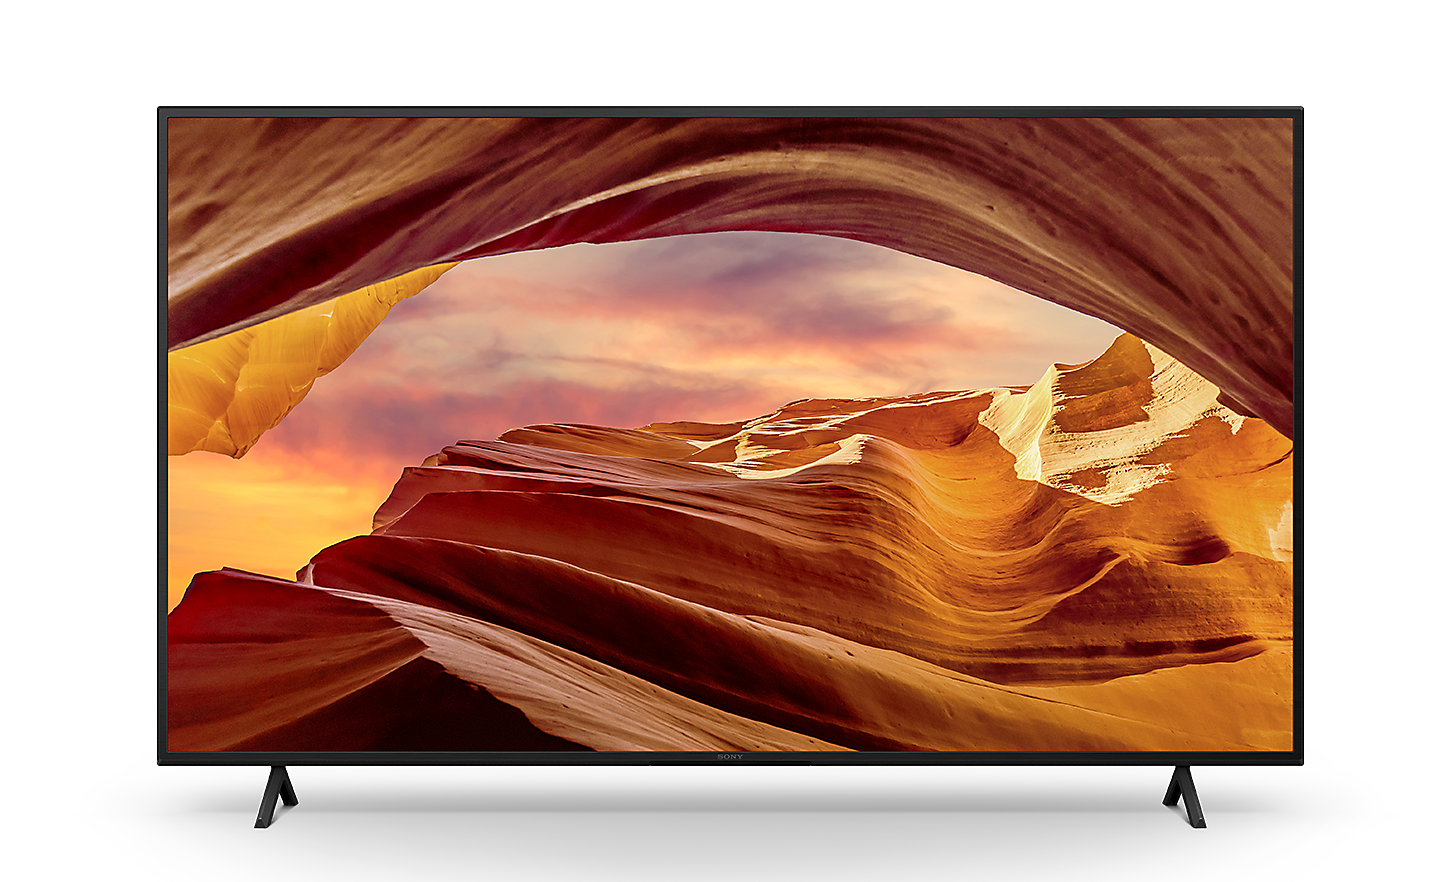 Sprednji pogled na televizor BRAVIA serije X75WL na stojalu, na zaslonu katerega je prikazana spektakularna skalnata pokrajina